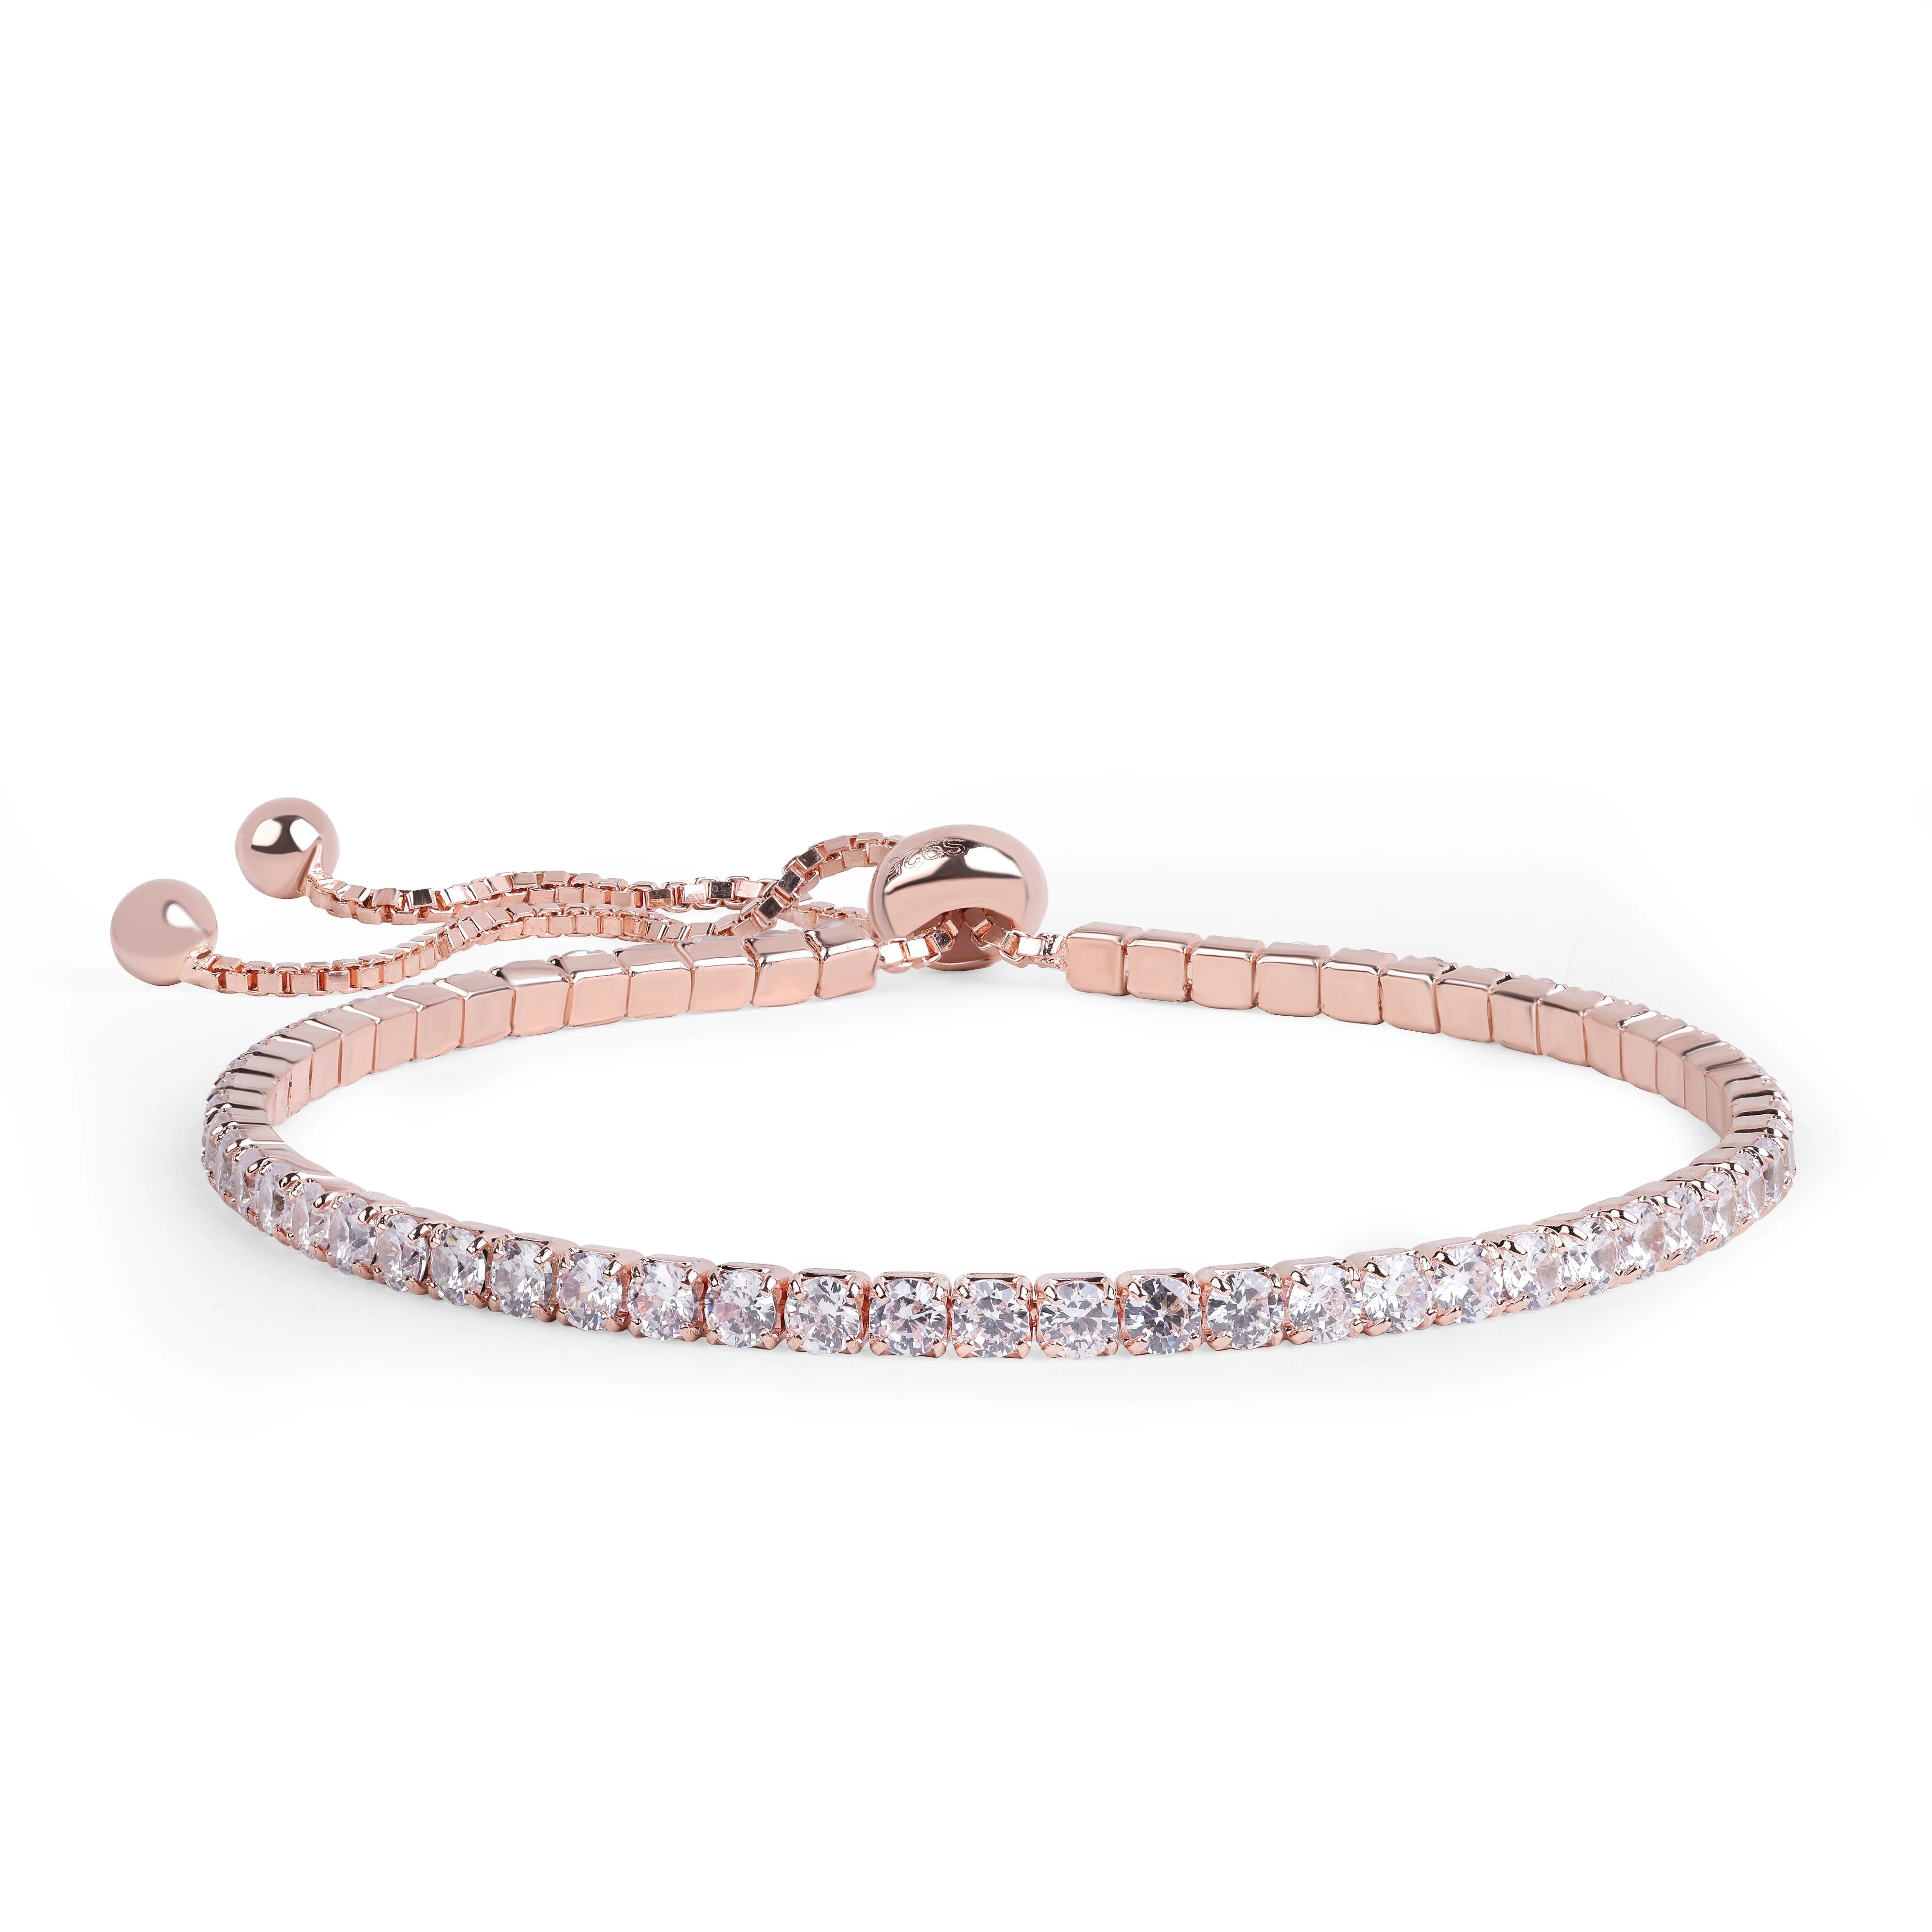 White Gold Diamond Tennis Bracelet Chainlink ADJUSTABLE Bolo Clasp | eBay